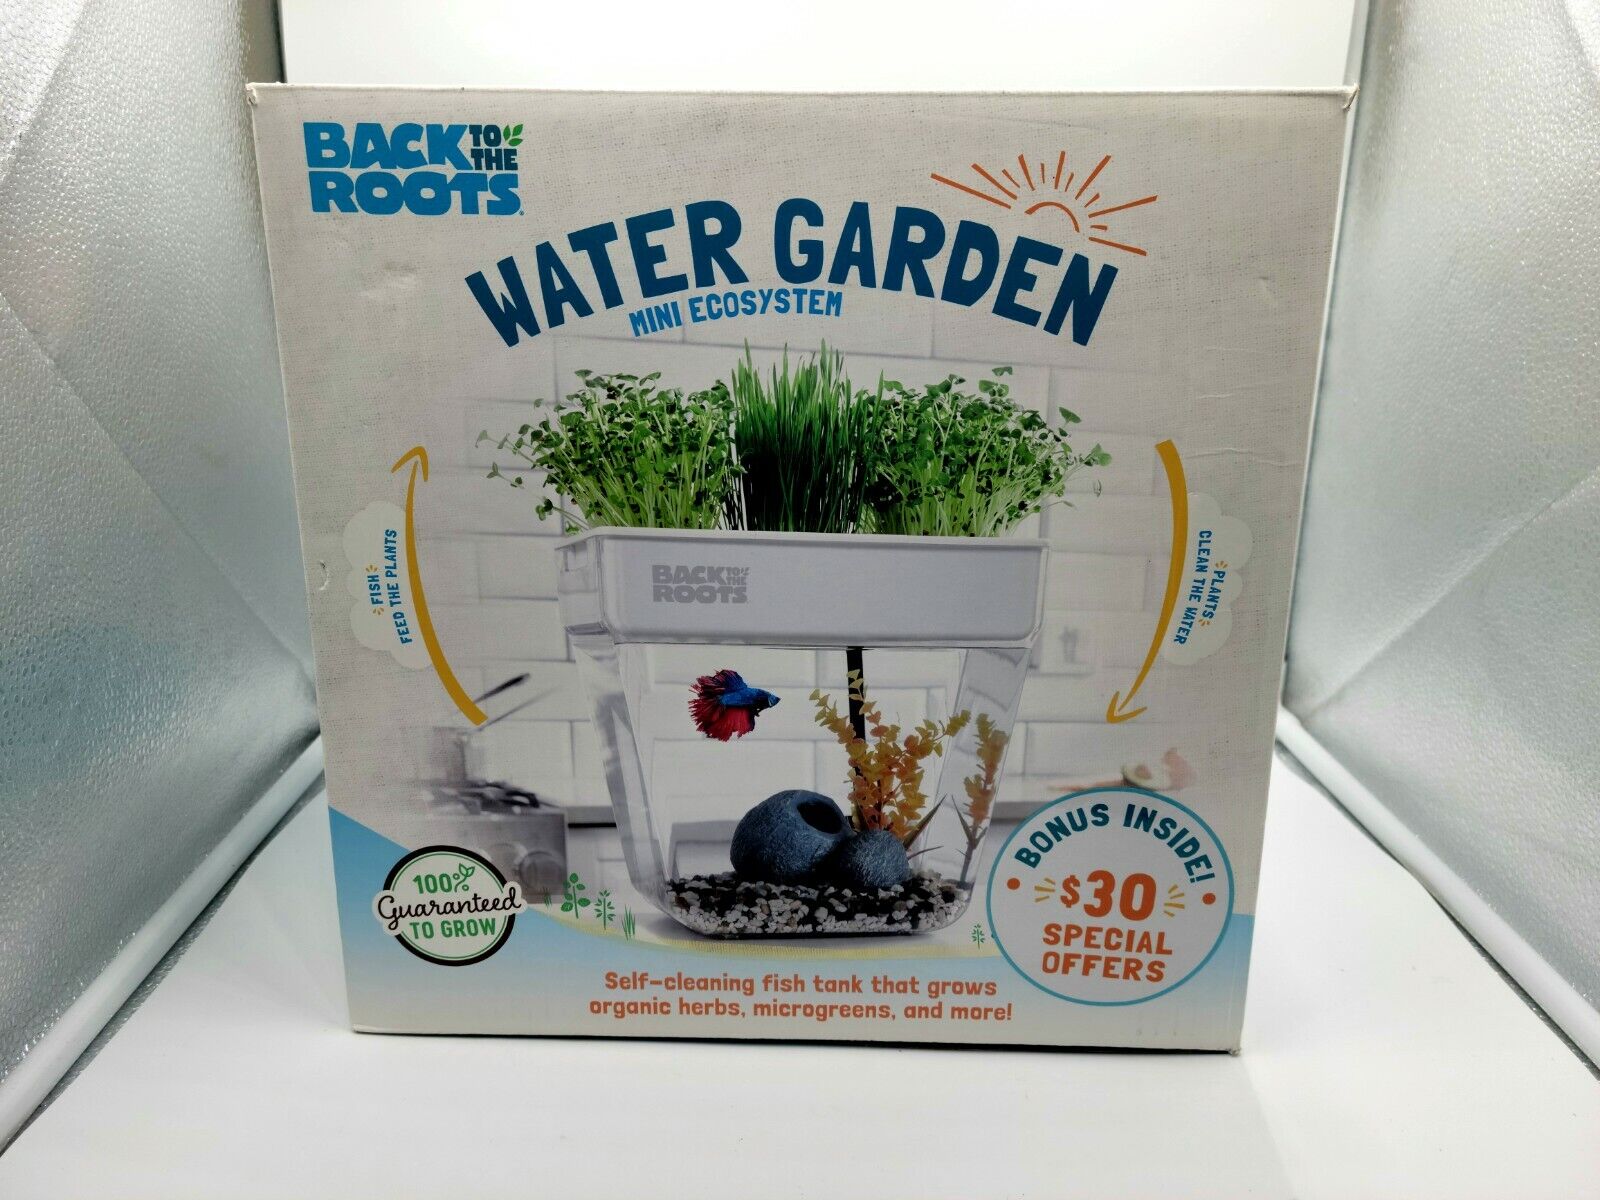 Back To The Roots Water Garden Mini Aquaponic Ecosystem Aquaponics NIB